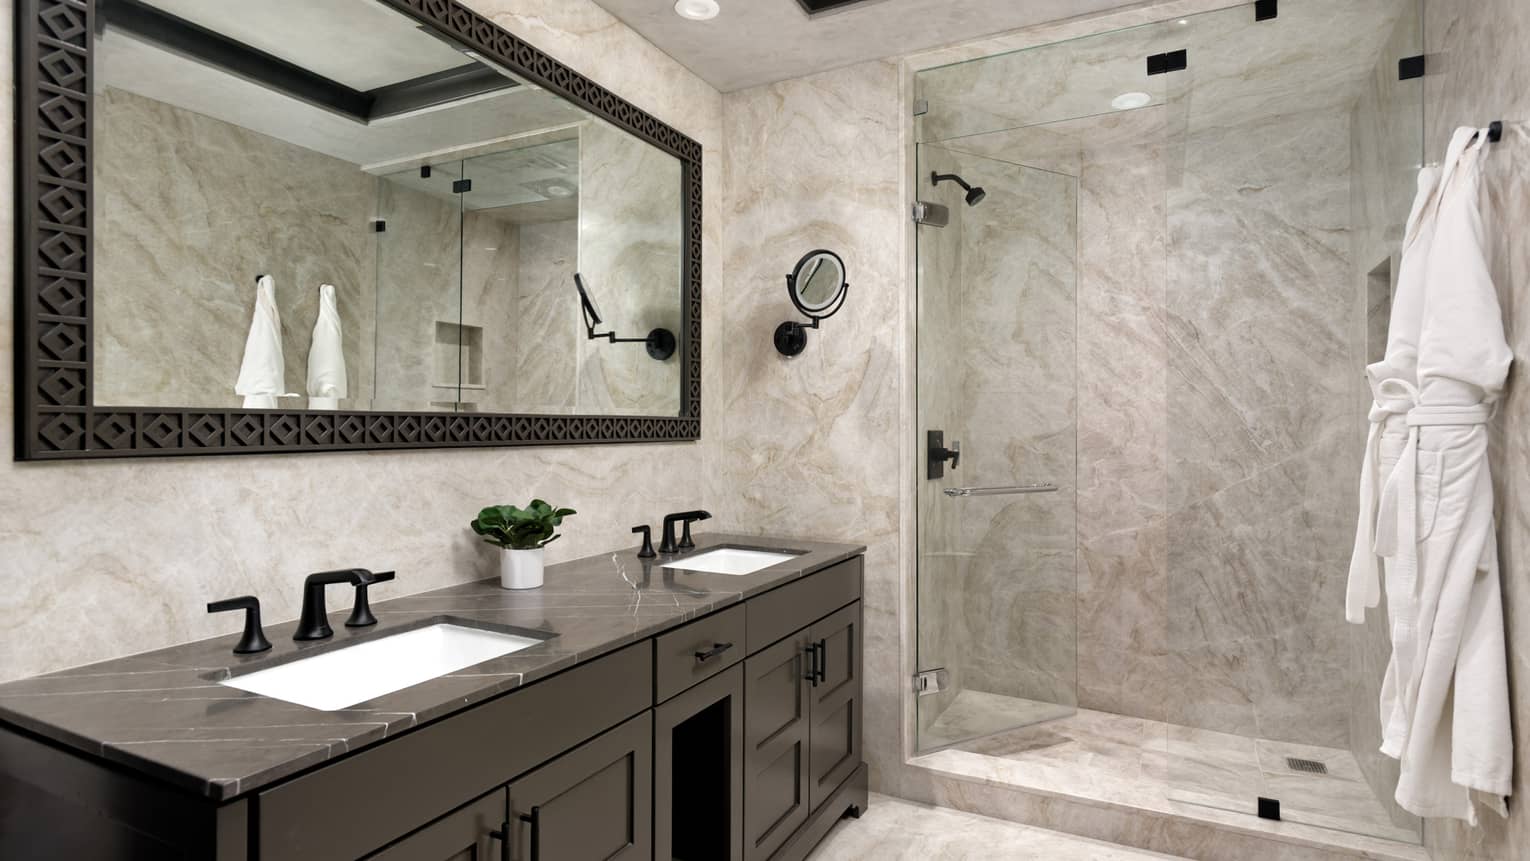 Bathroom with granite walls, walk-in glass shower, hanging robes, double vanity